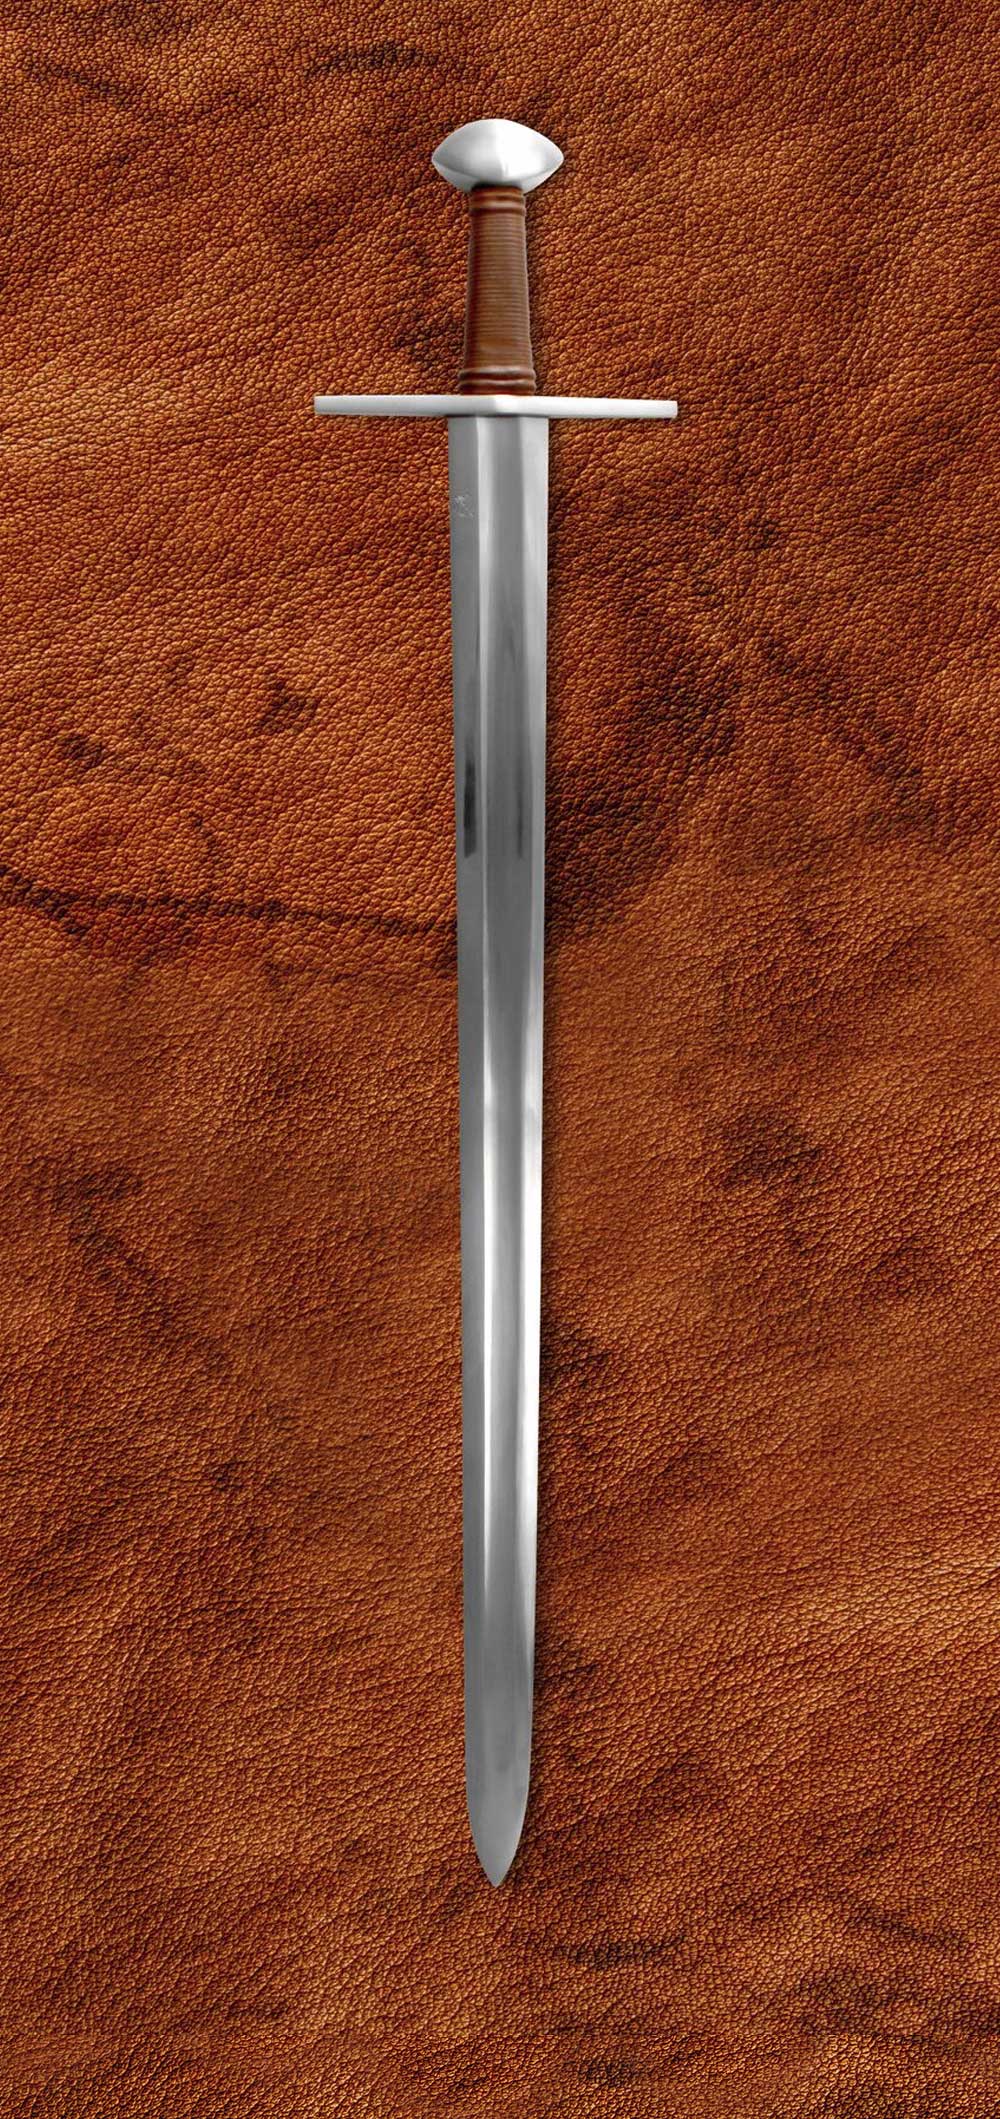 Sword Types